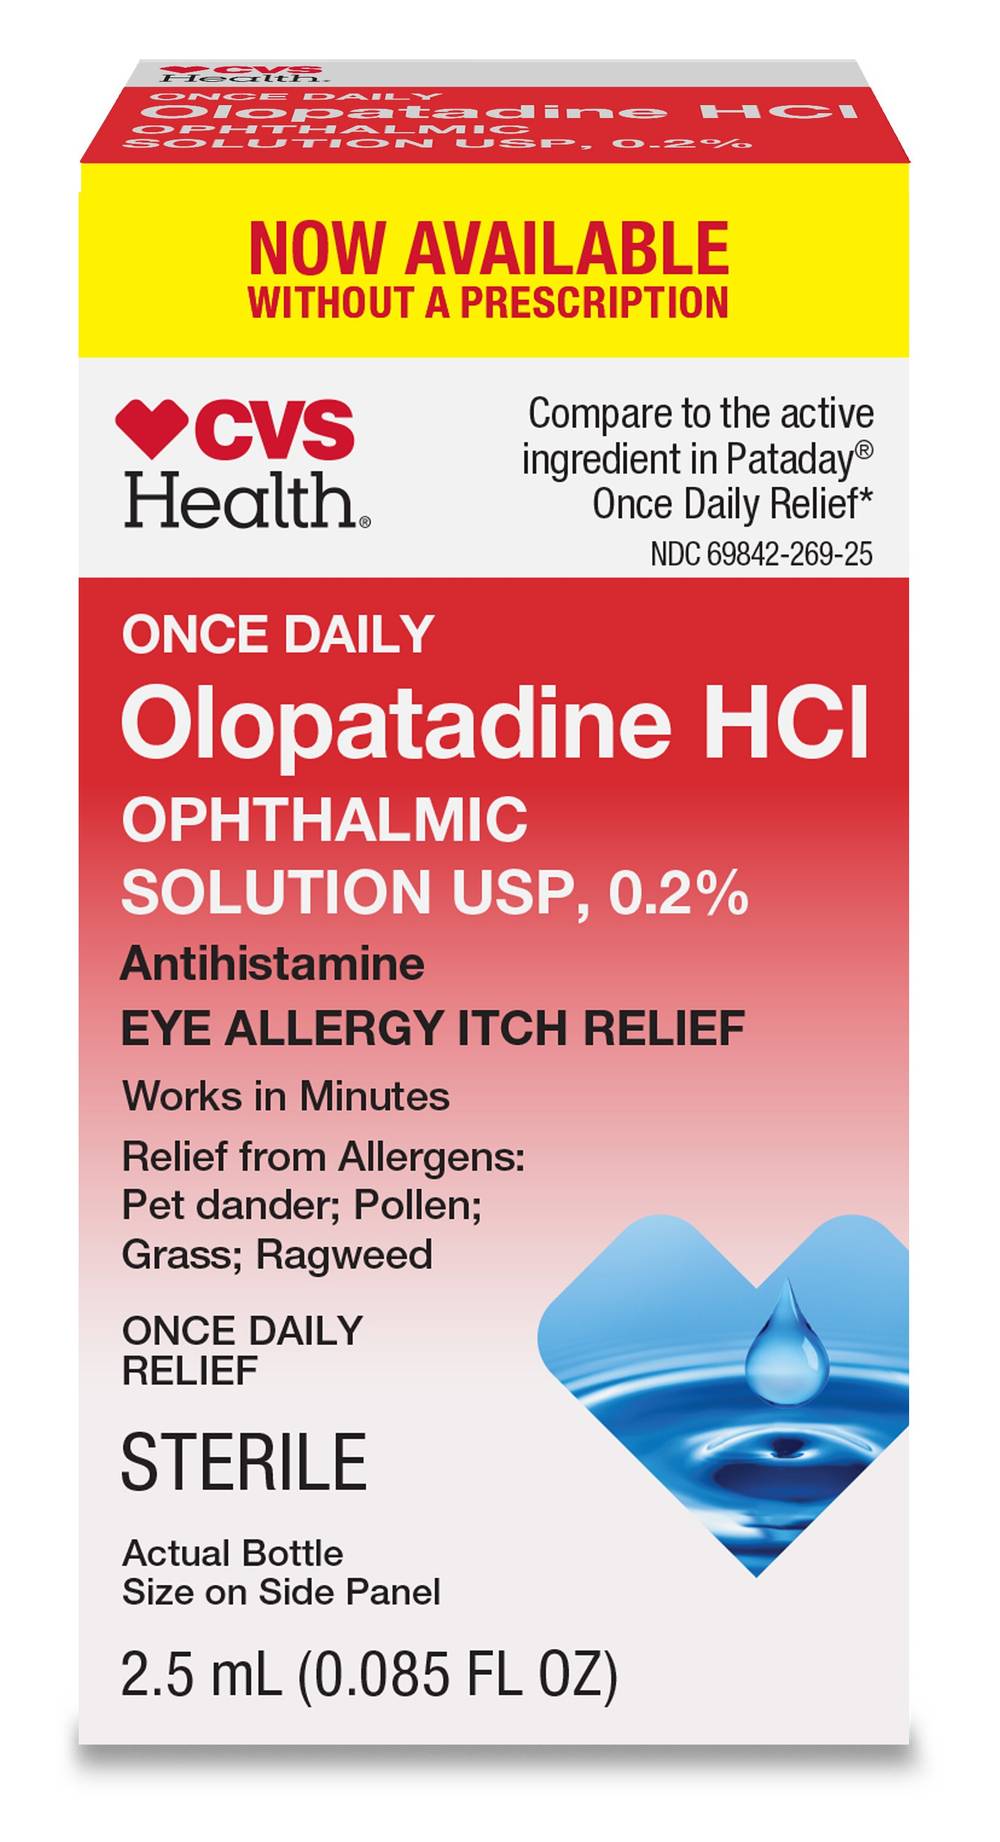 Cvs Health Olopatadine Hcl Eye Allergy Relief Ophthalmic Solution Usp